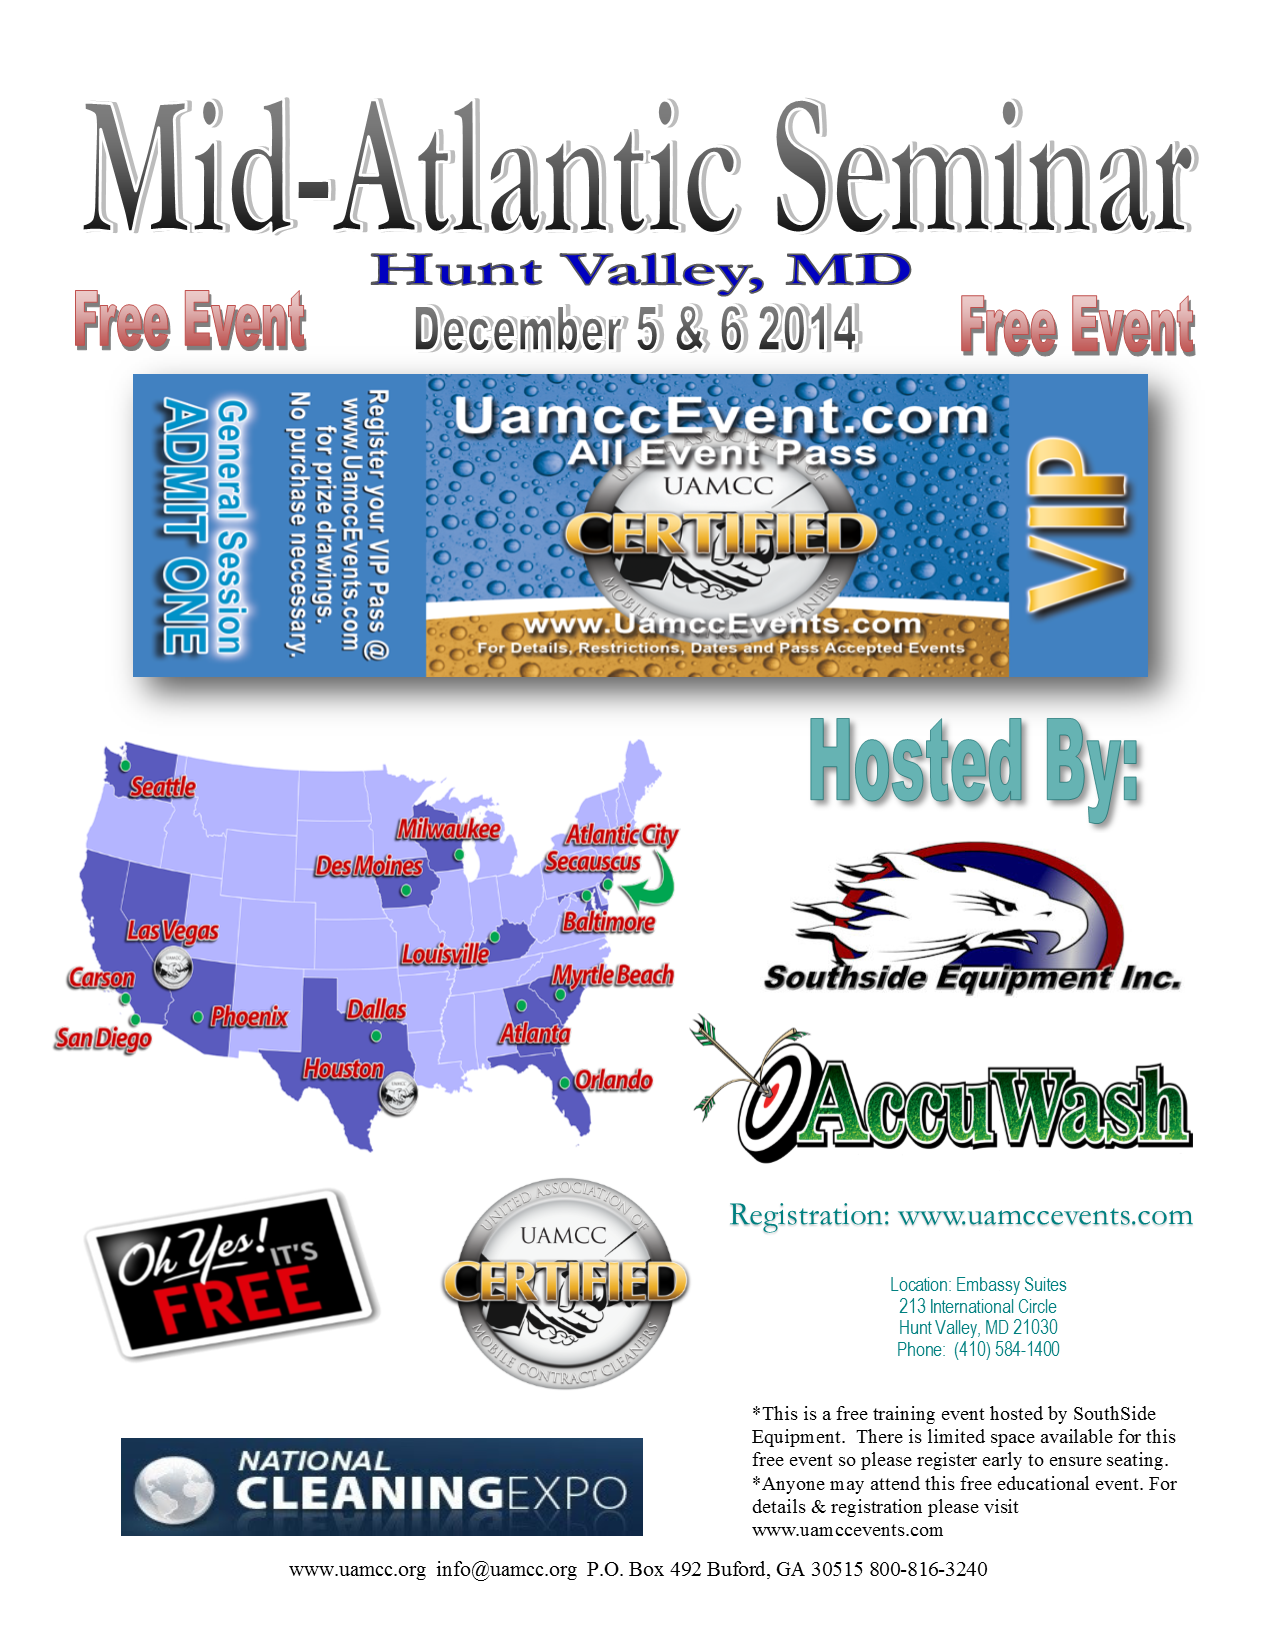 Mid-Atlantic Networking Event